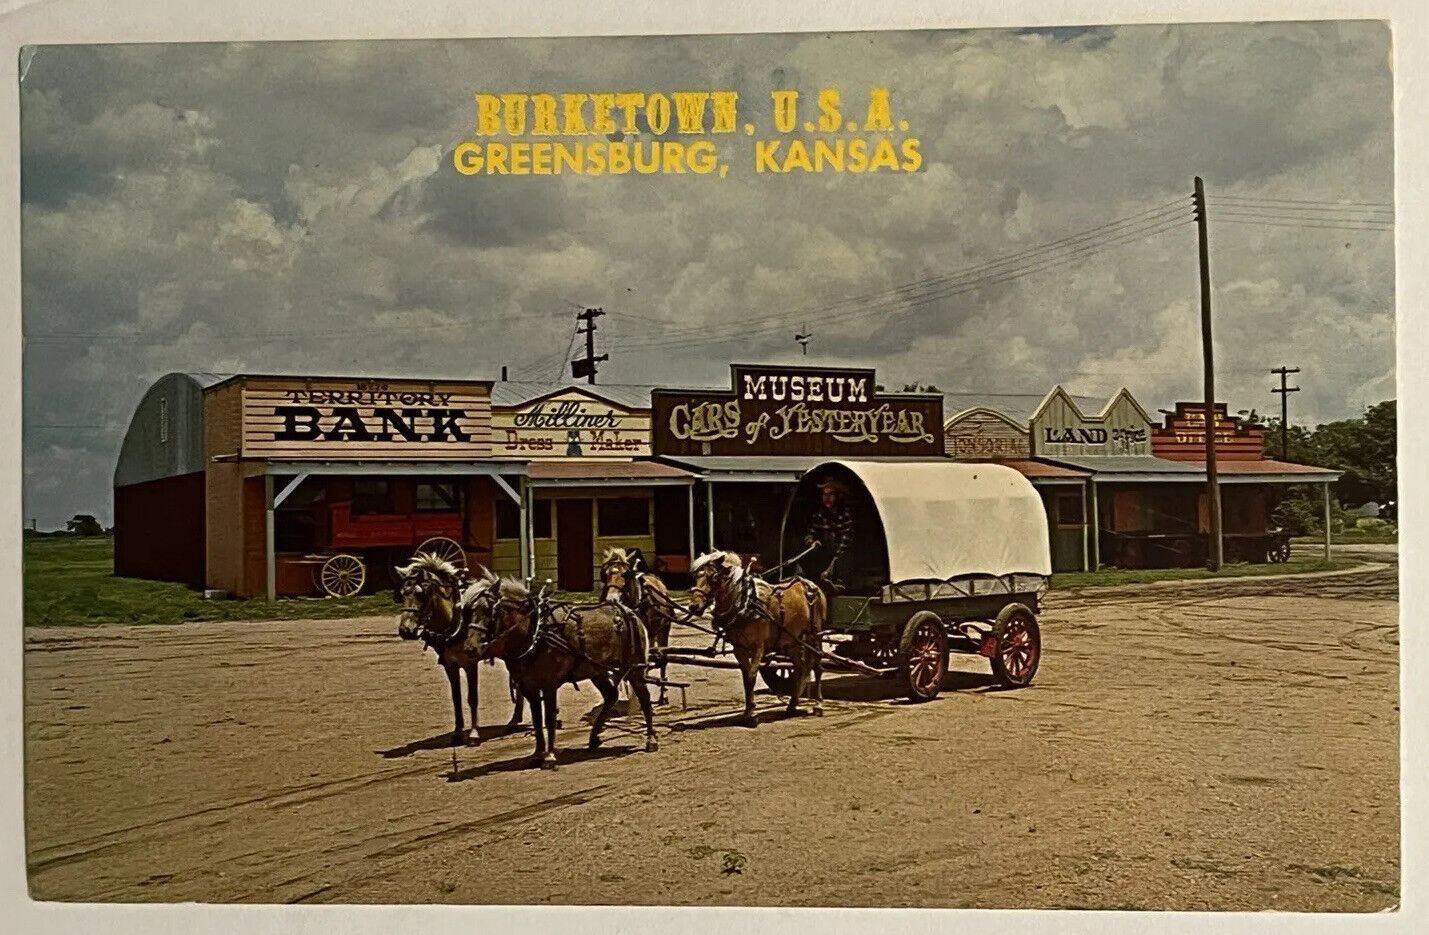 Burketown Greensburg Kansas Covered Wagon Horses Museum Postcard